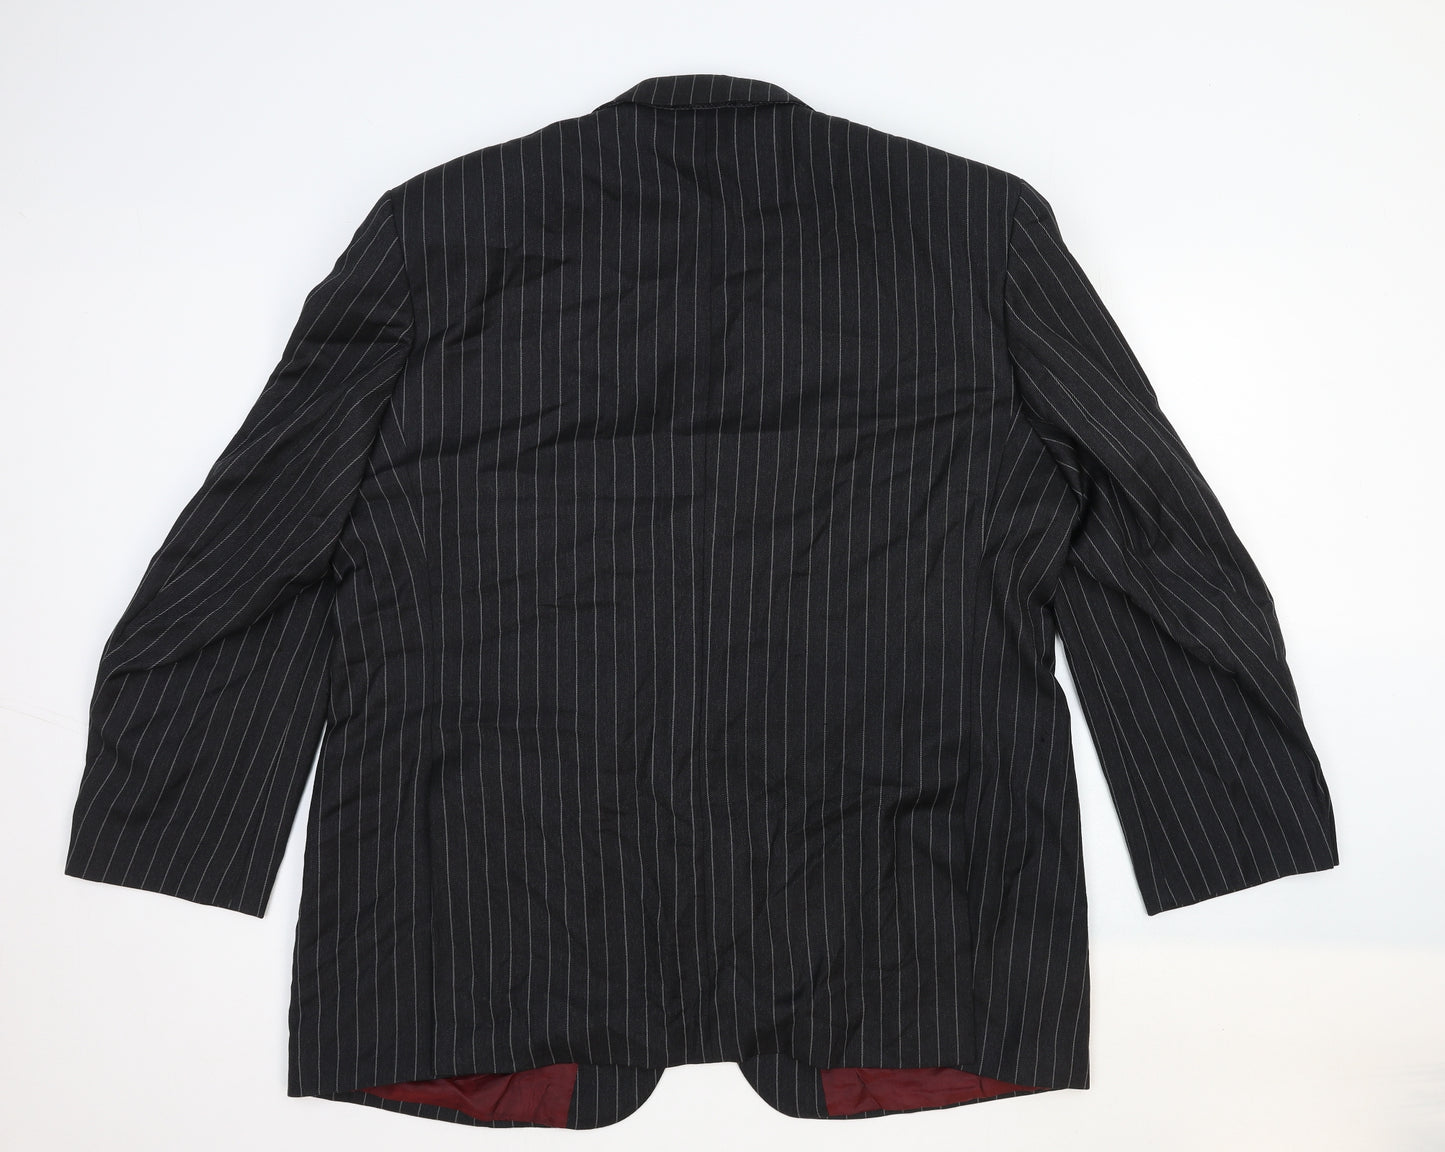 Dehavilland Mens Grey Polka Dot Cotton Jacket Suit Jacket Size 50 Regular